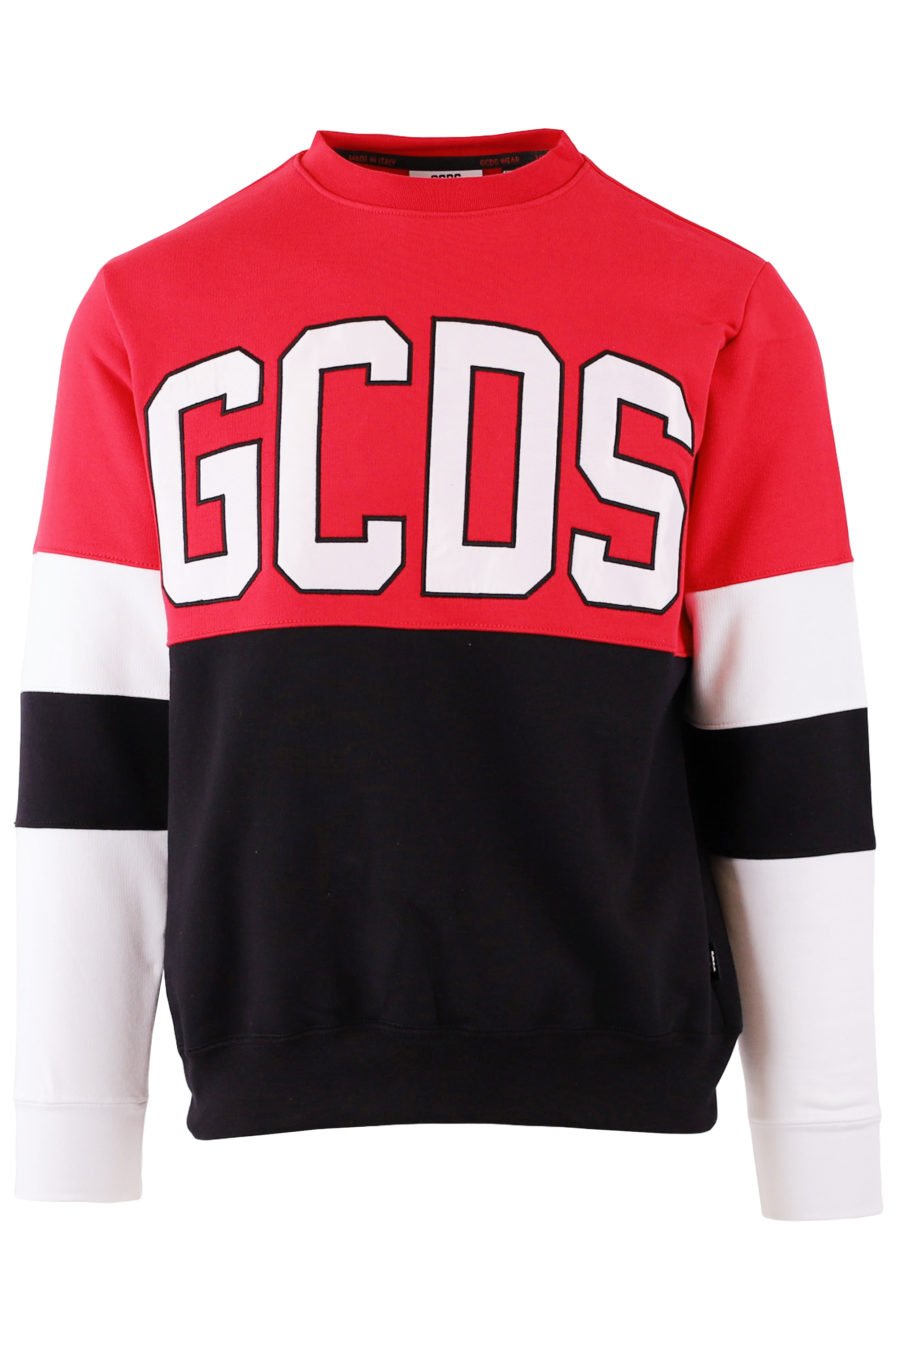 Sweatshirt mit rotem Farbblockmuster und Logo - IMG 7689 copy